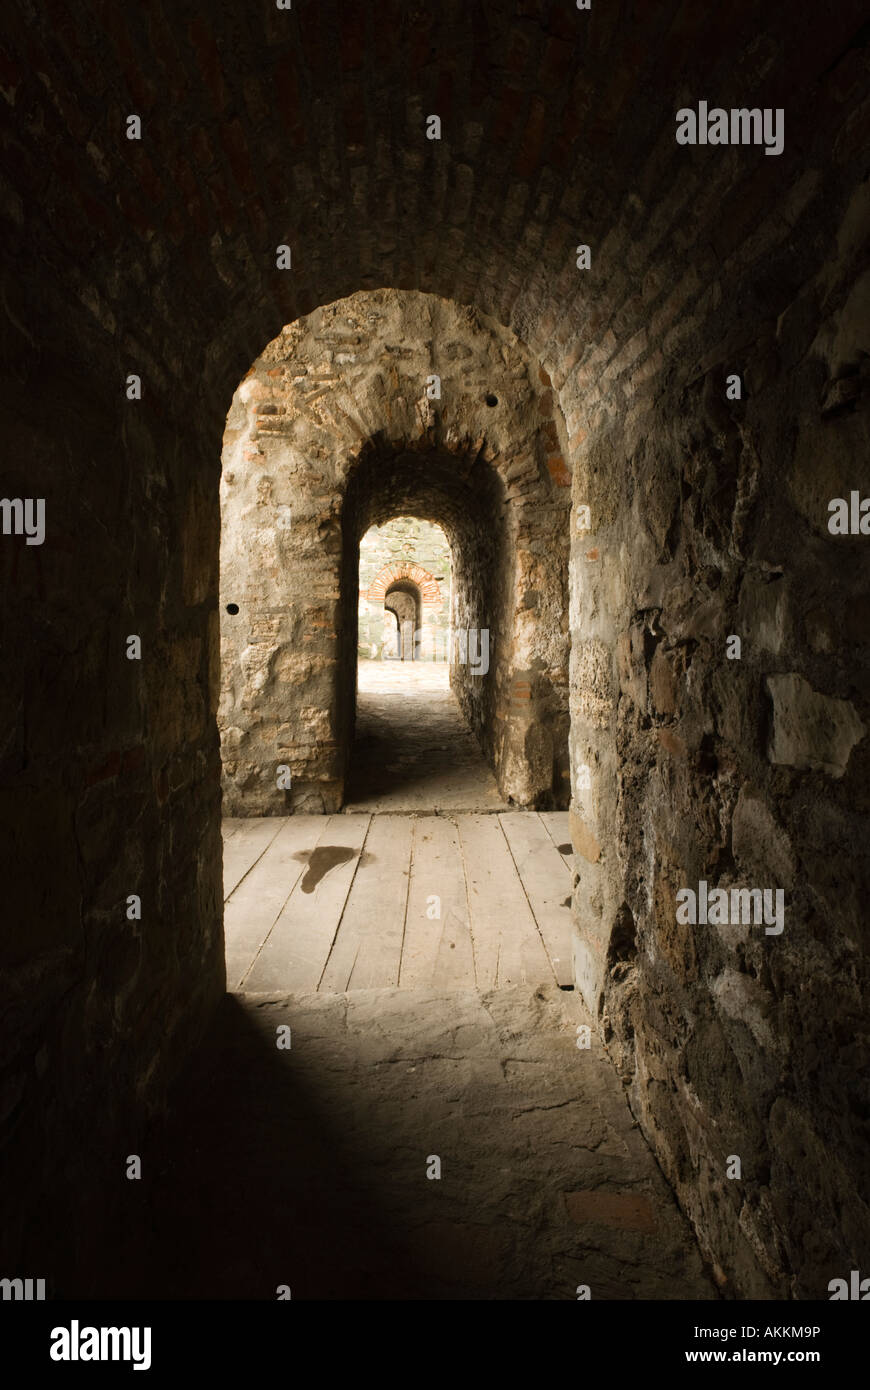 Archway in Smederevo fortress, Serbia Stock Photo